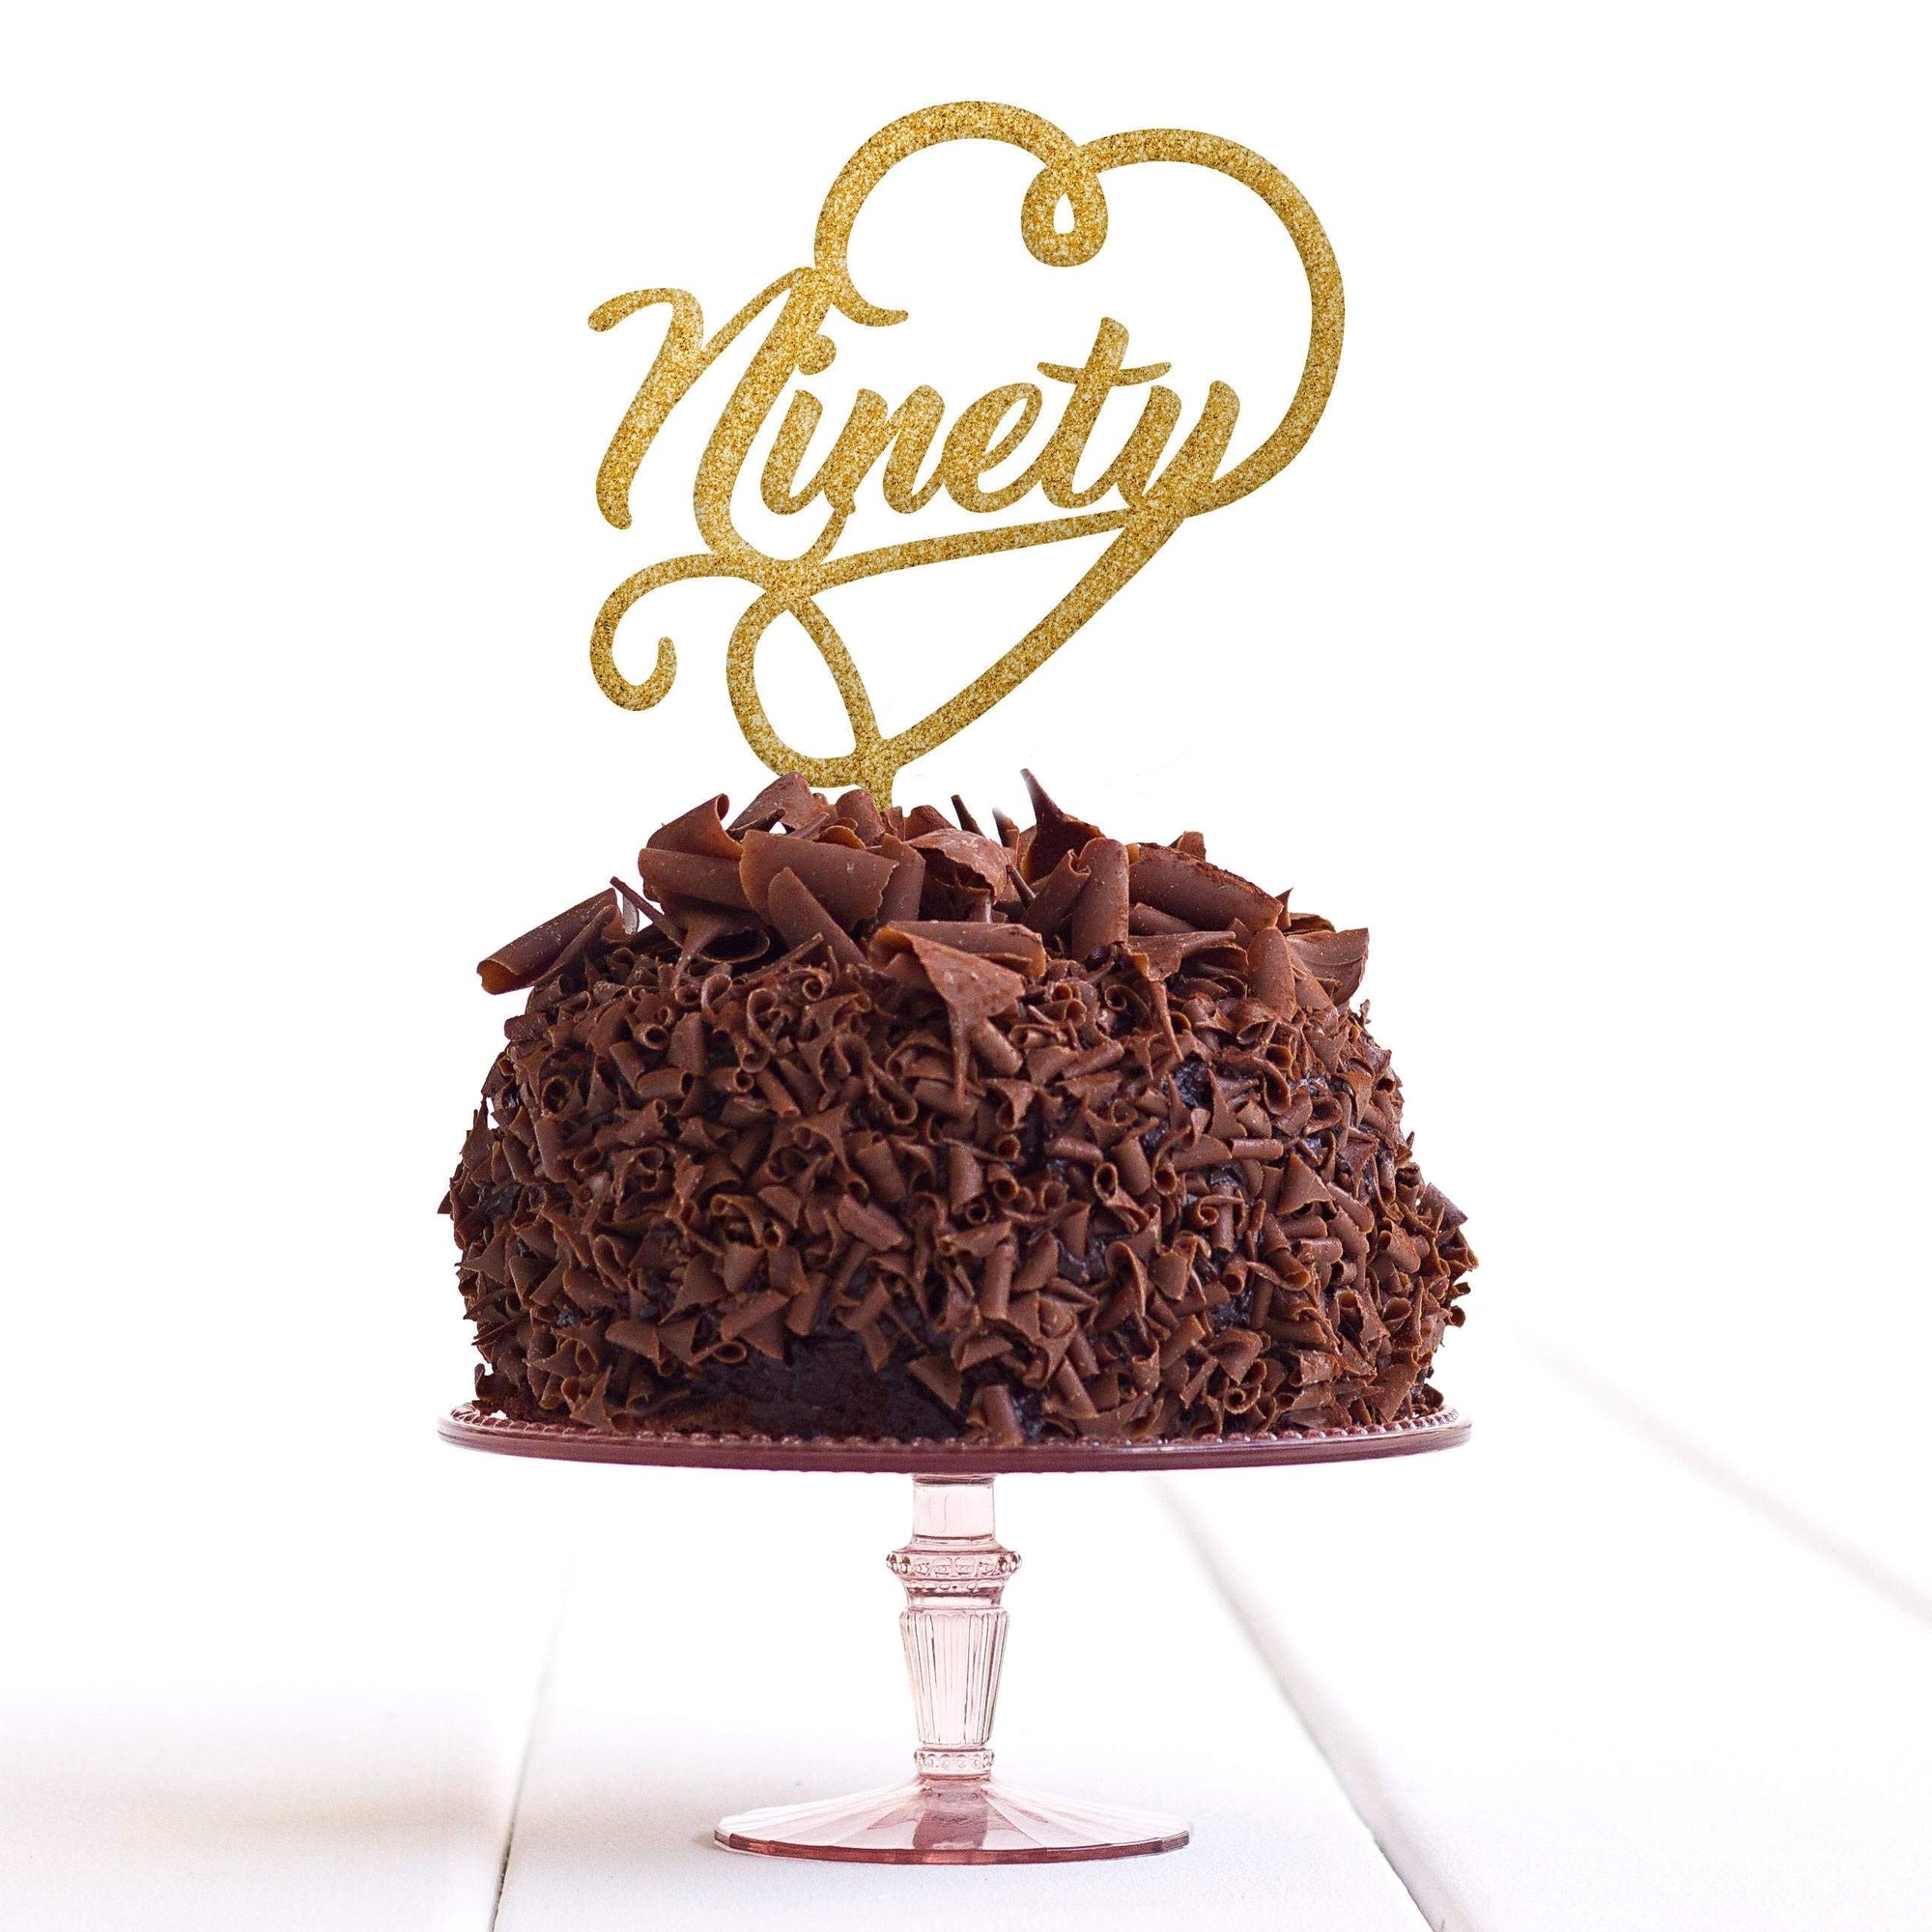 Ninety 90 Ninetieth Cake Topper Birthday Party Decoration Food Safe Regular – Quick Worldwide Dispatch - DirectlyPersonalised